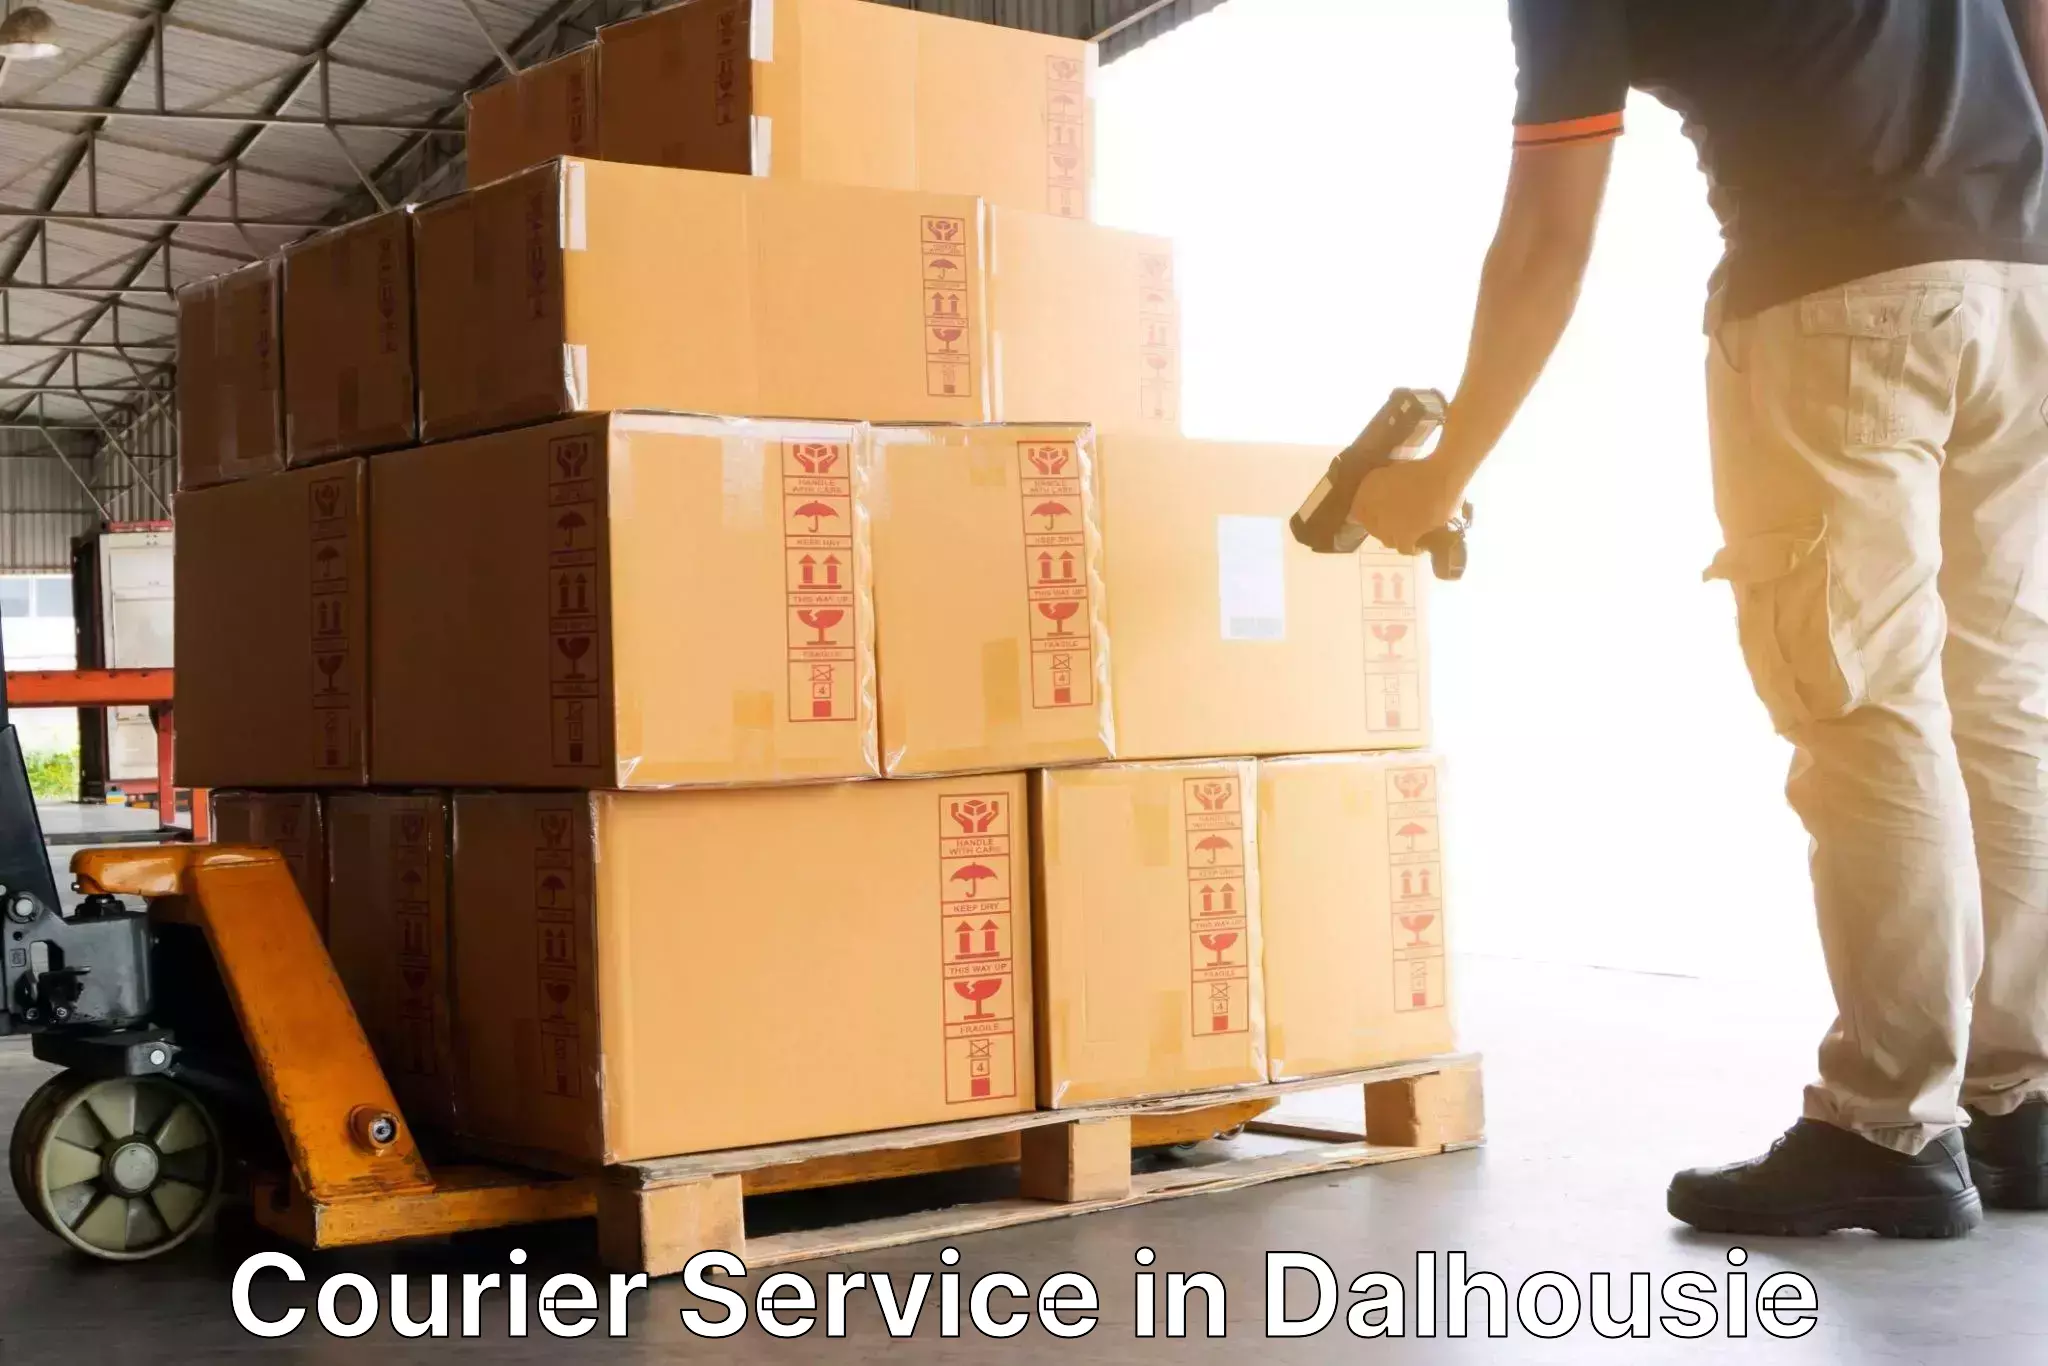 Efficient parcel service in Dalhousie